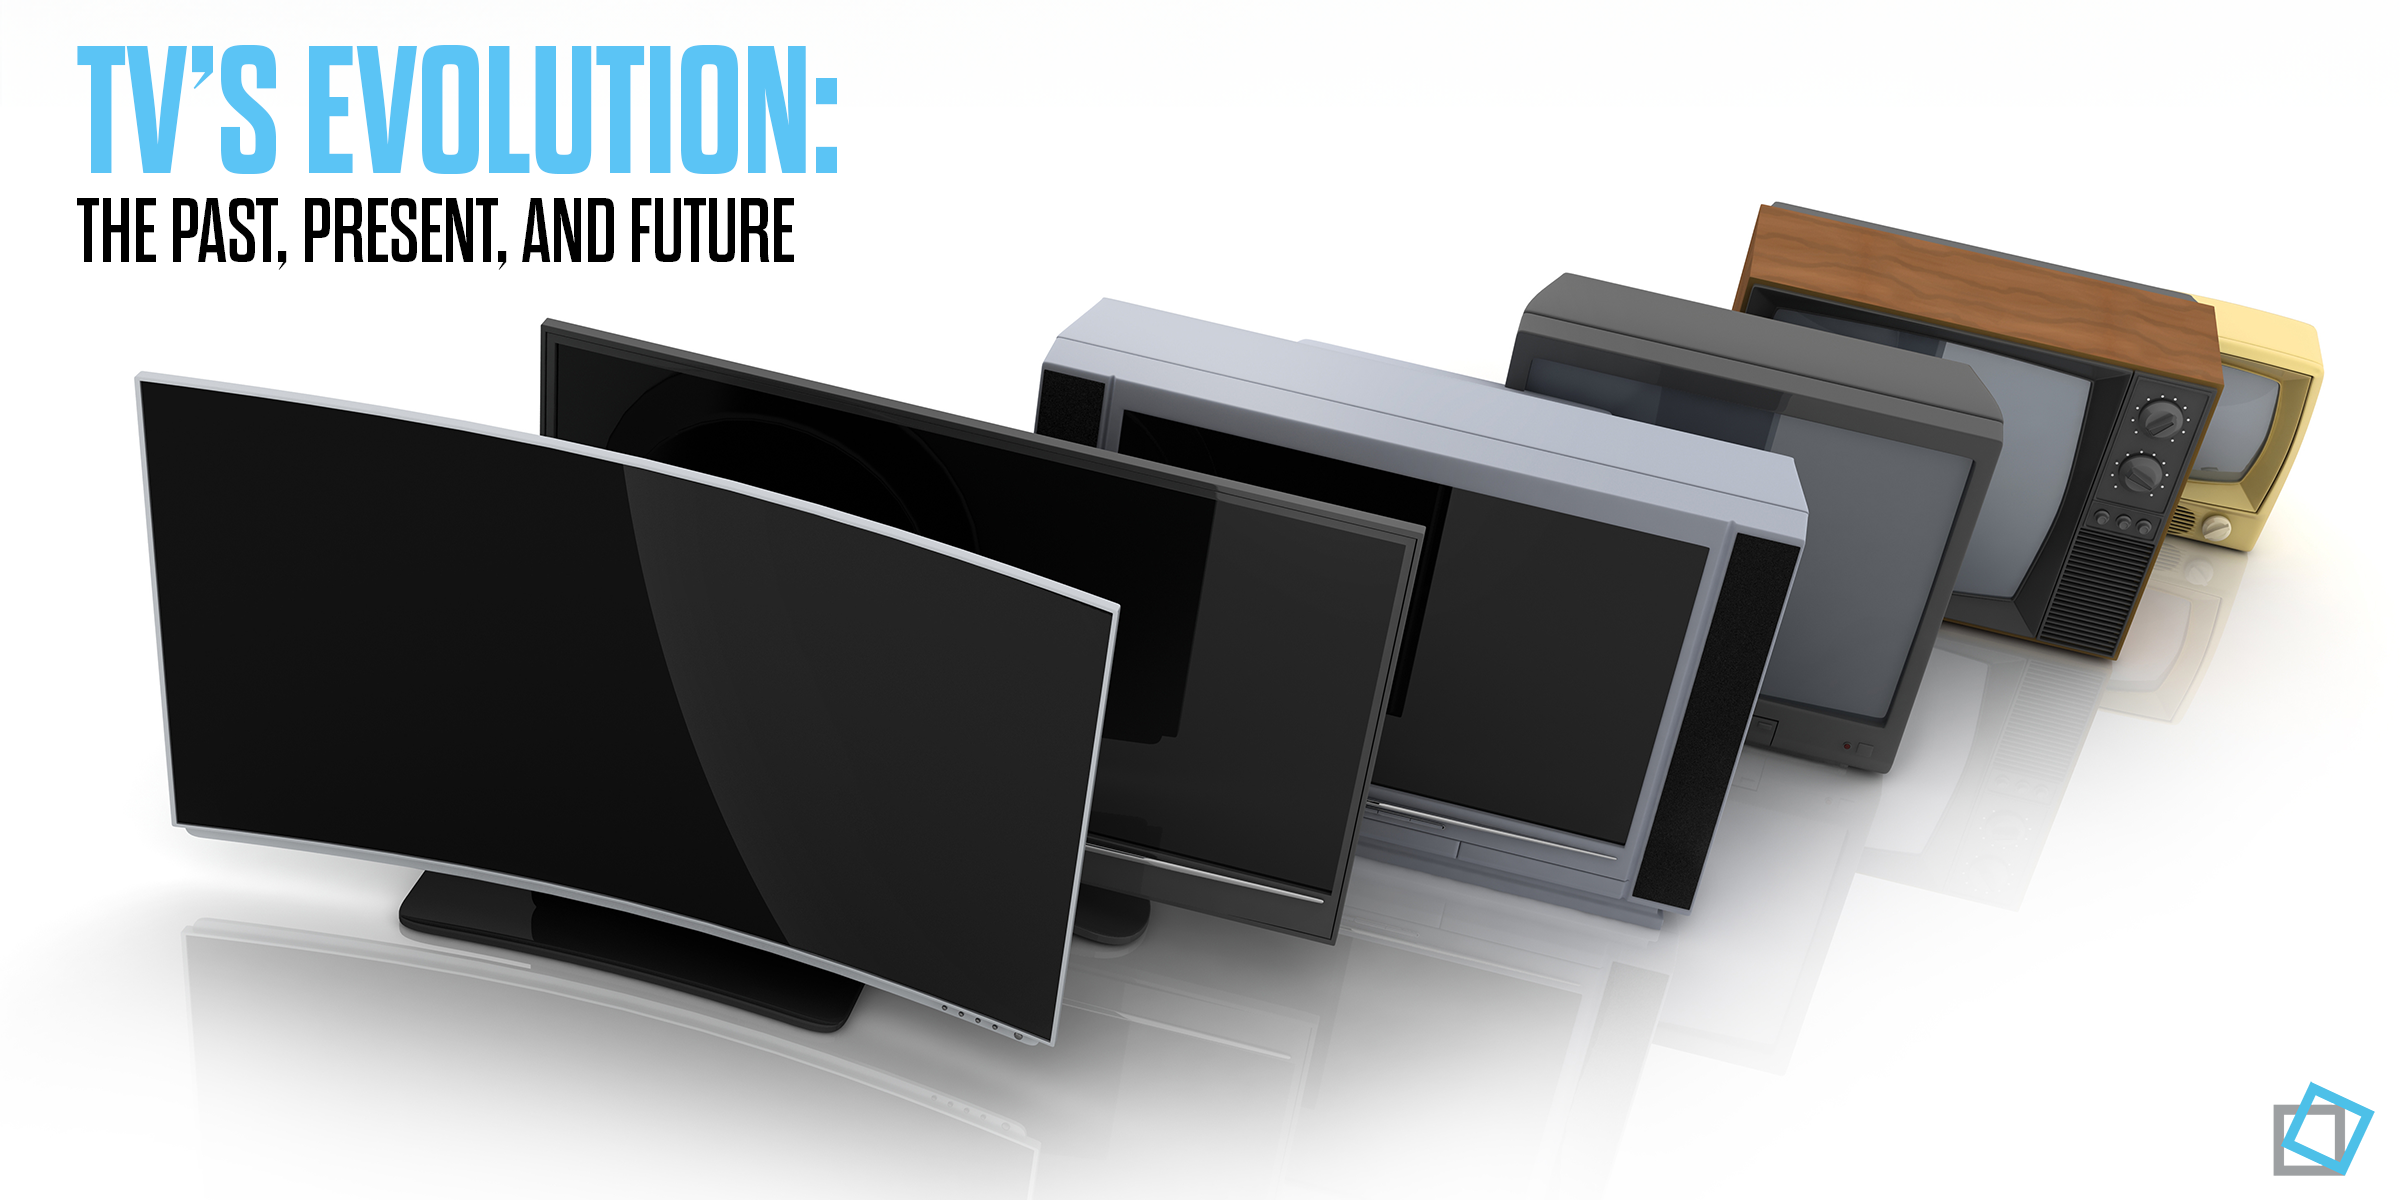 tvs evolution past future and present